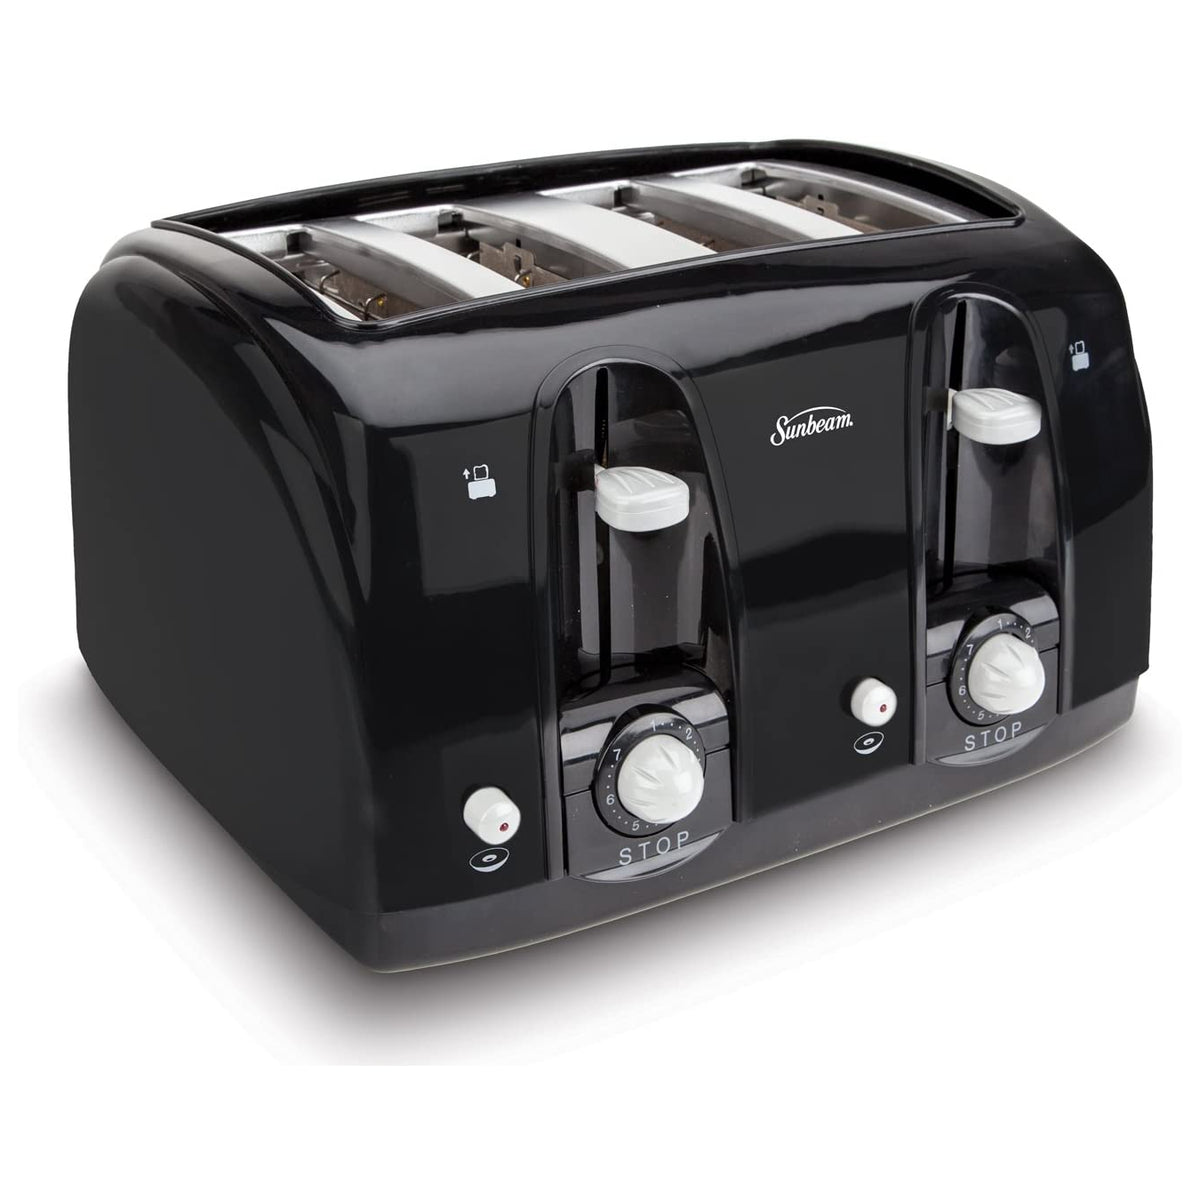 Sunbeam 003911-100-000 Wide Slot Electronic Toaster, 4-Slice, Black